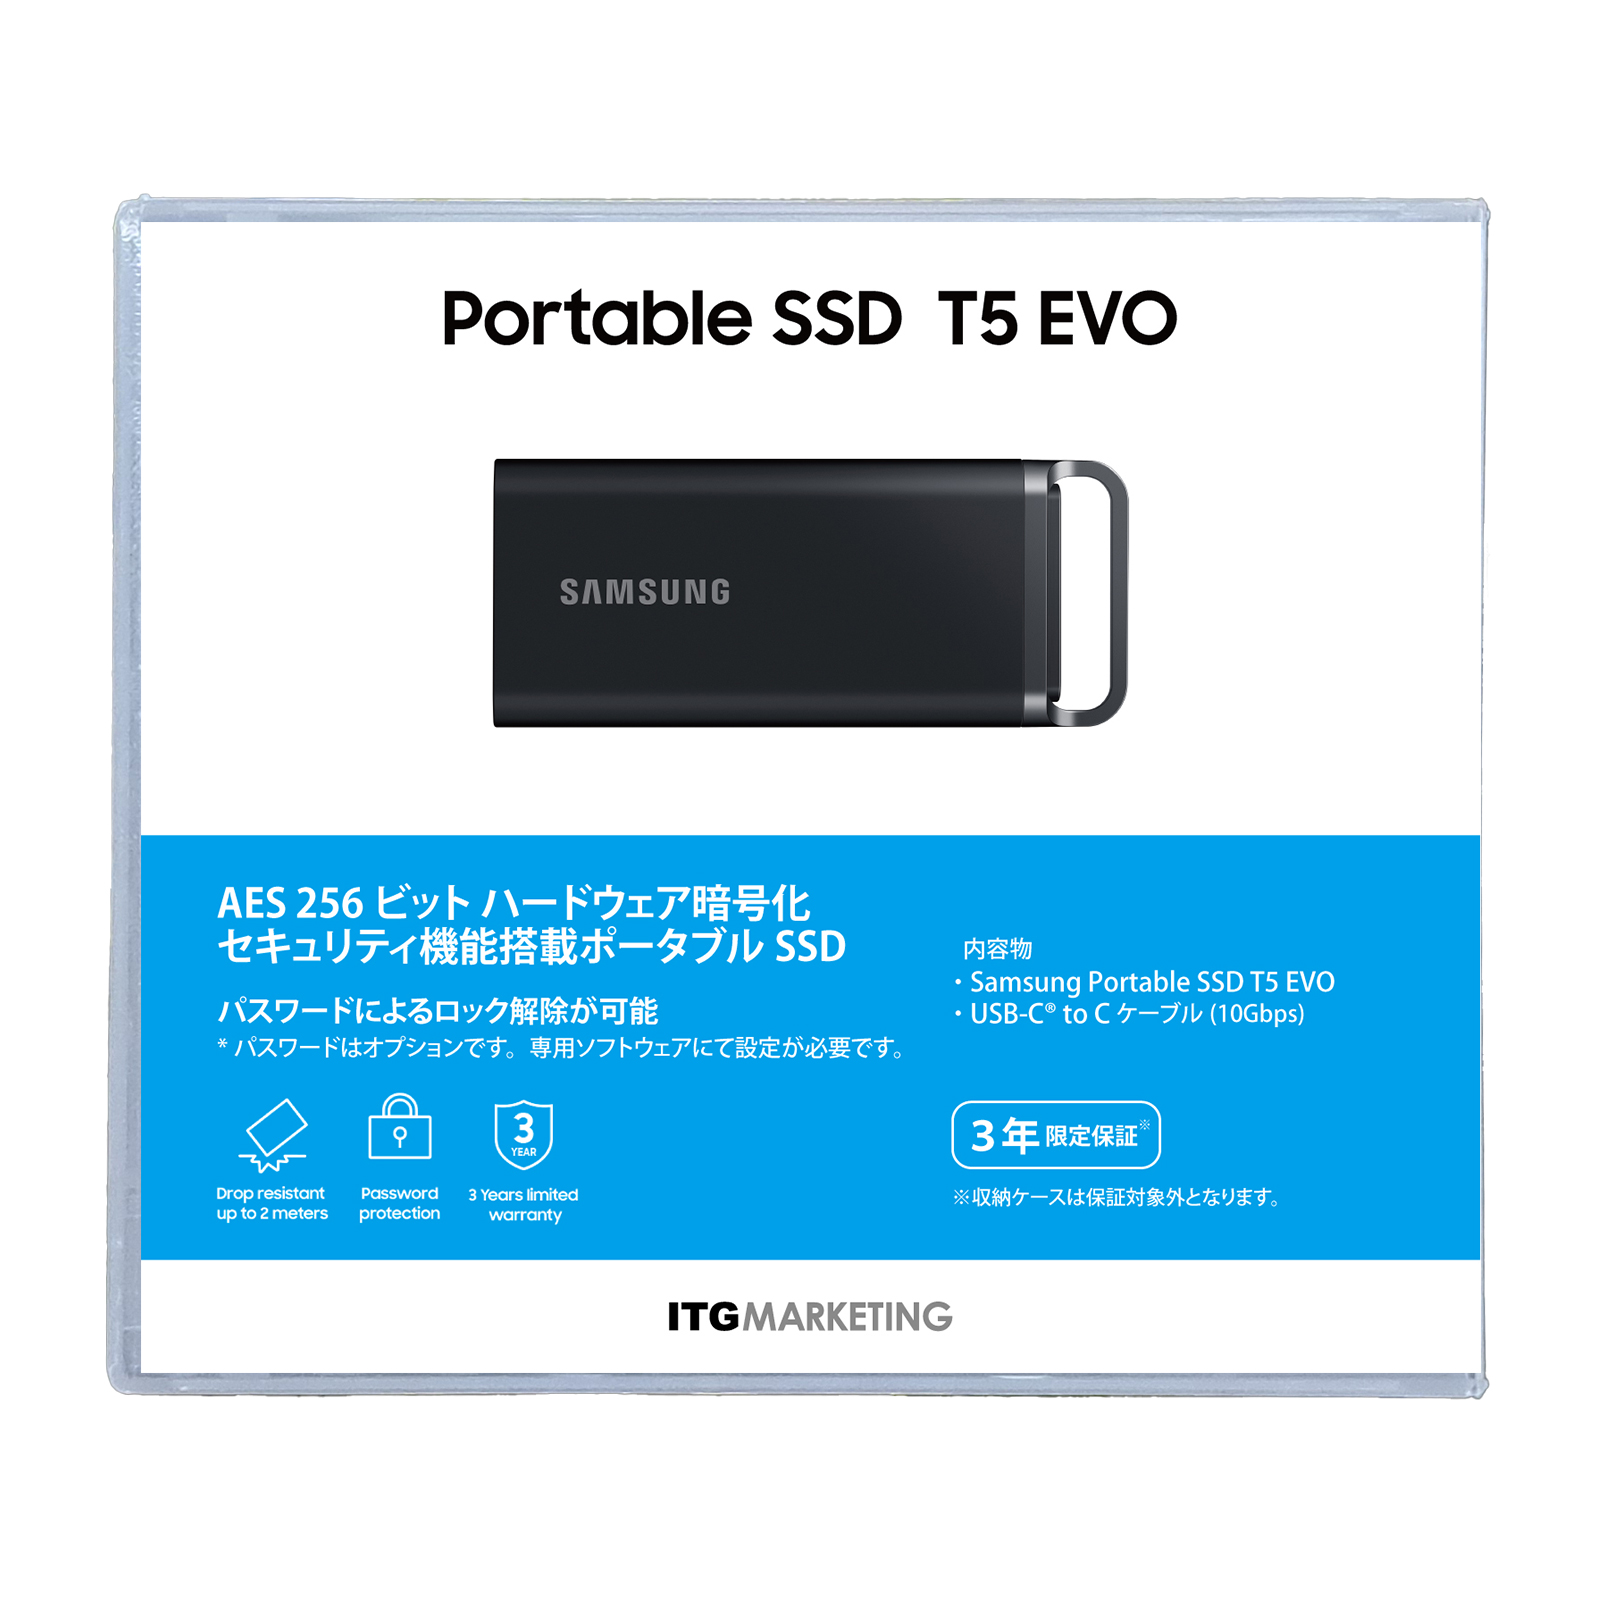 T5 EVO | ITGマーケティング - Samsung SSD / microSD の国内正規品取扱代理店 - 法人直販サイト ITG Direct